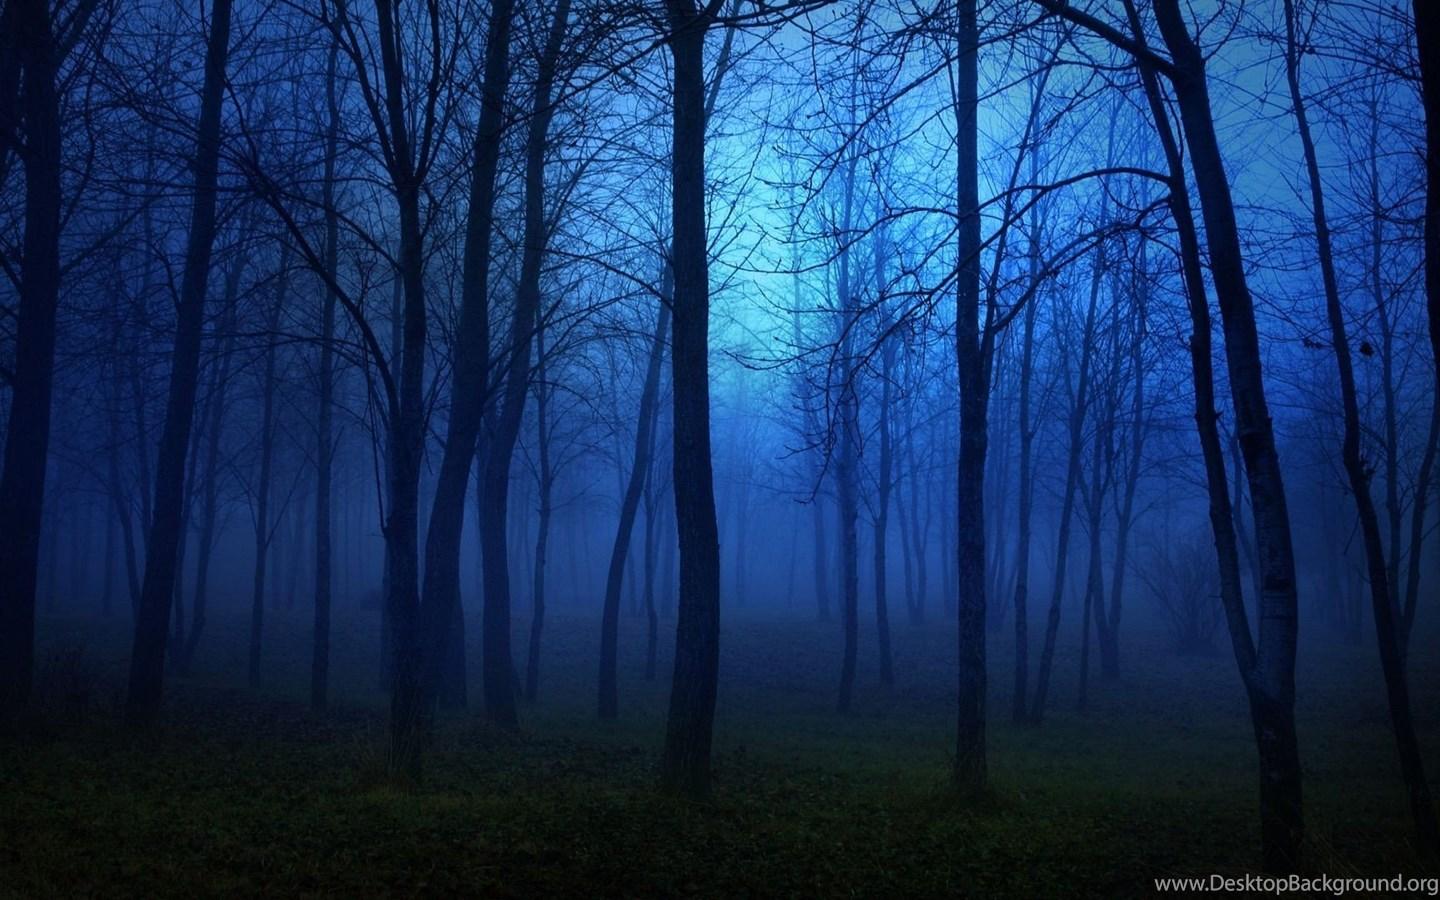 Forest Nature Tree Landscape Night Fog Mist Dark Spooky